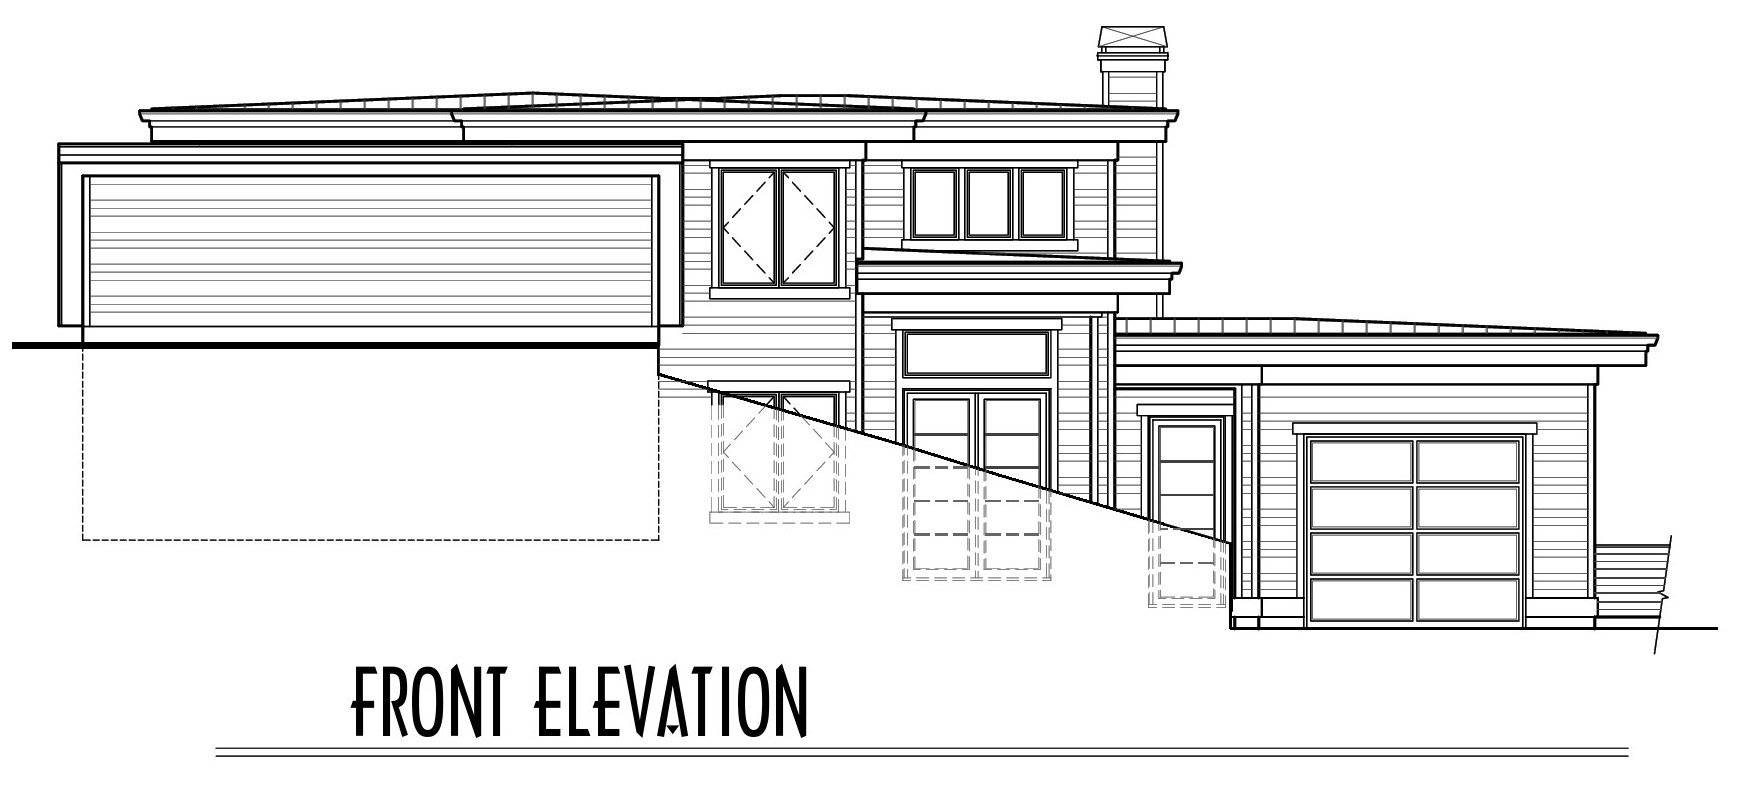 Awbrey Pointe - Lot 13 - Custom Duplex (PS-1550-18) - Final Plan SET-Front Elevation Sales.jpg